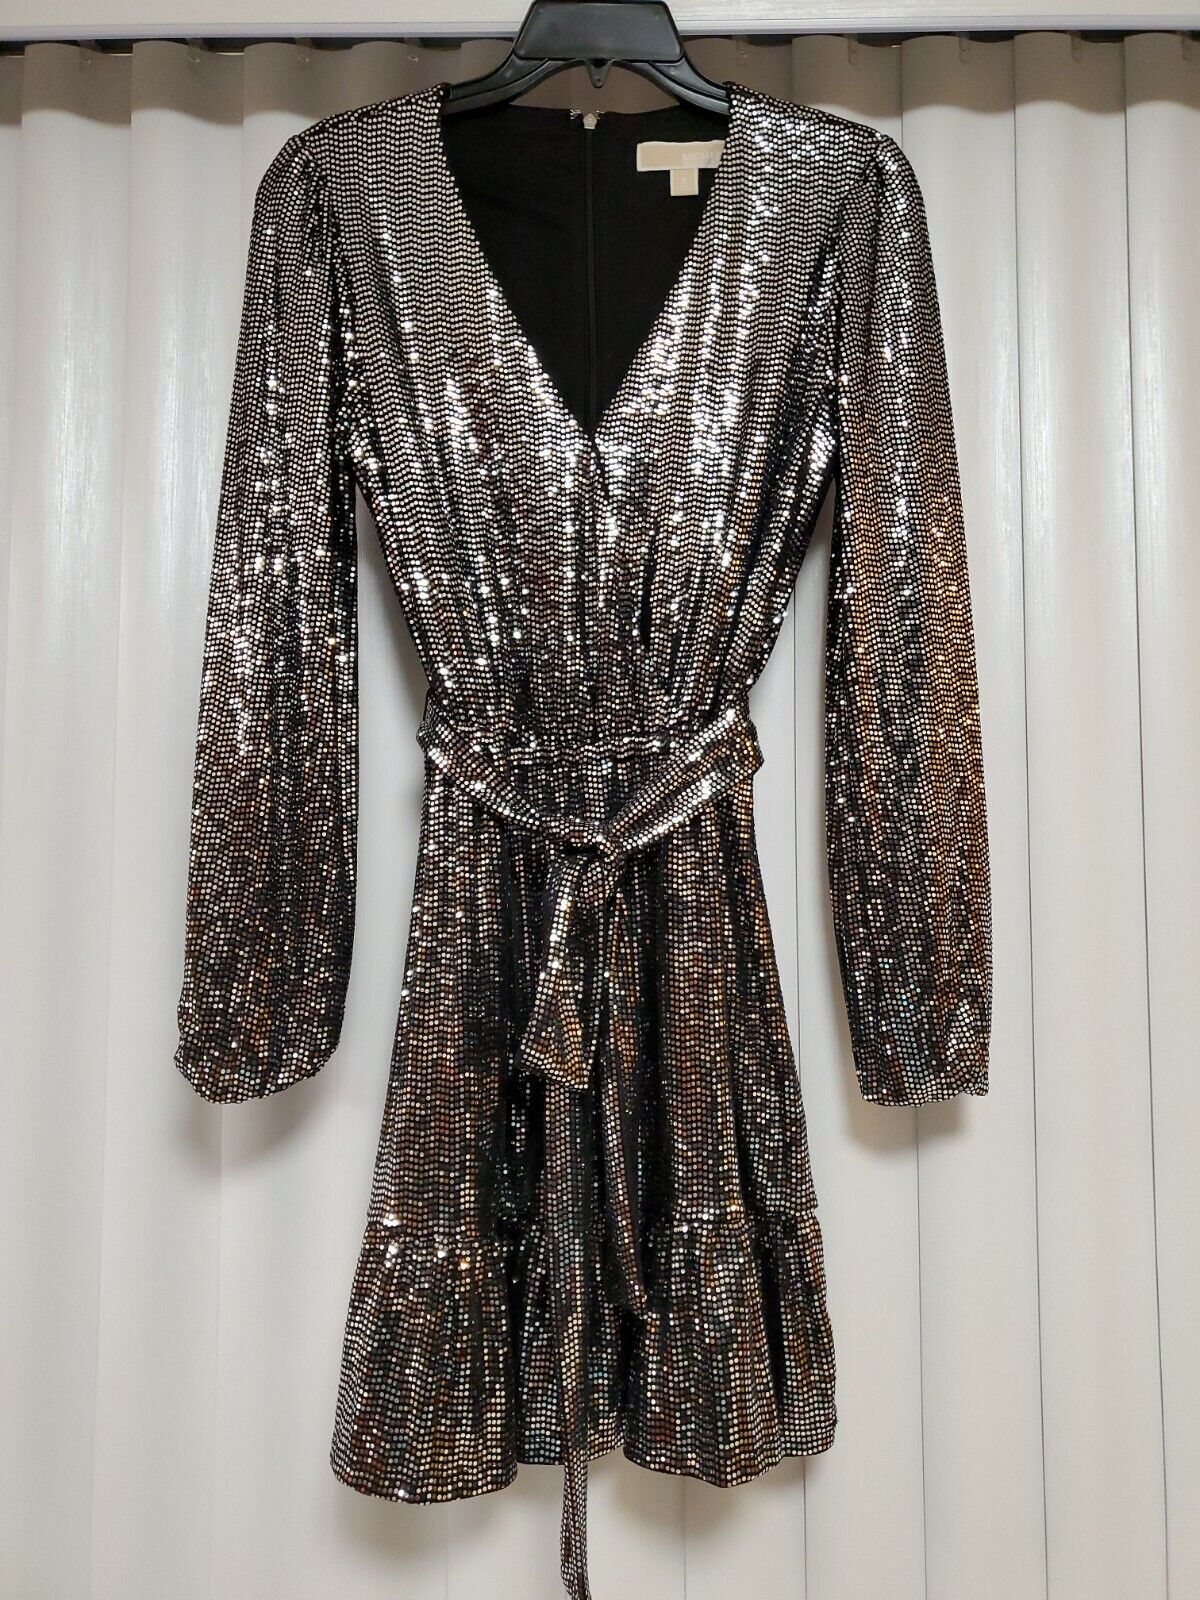 MICHAEL KORS Mirror Dot Matte-Jersey Crossover Dress Size S | eBay